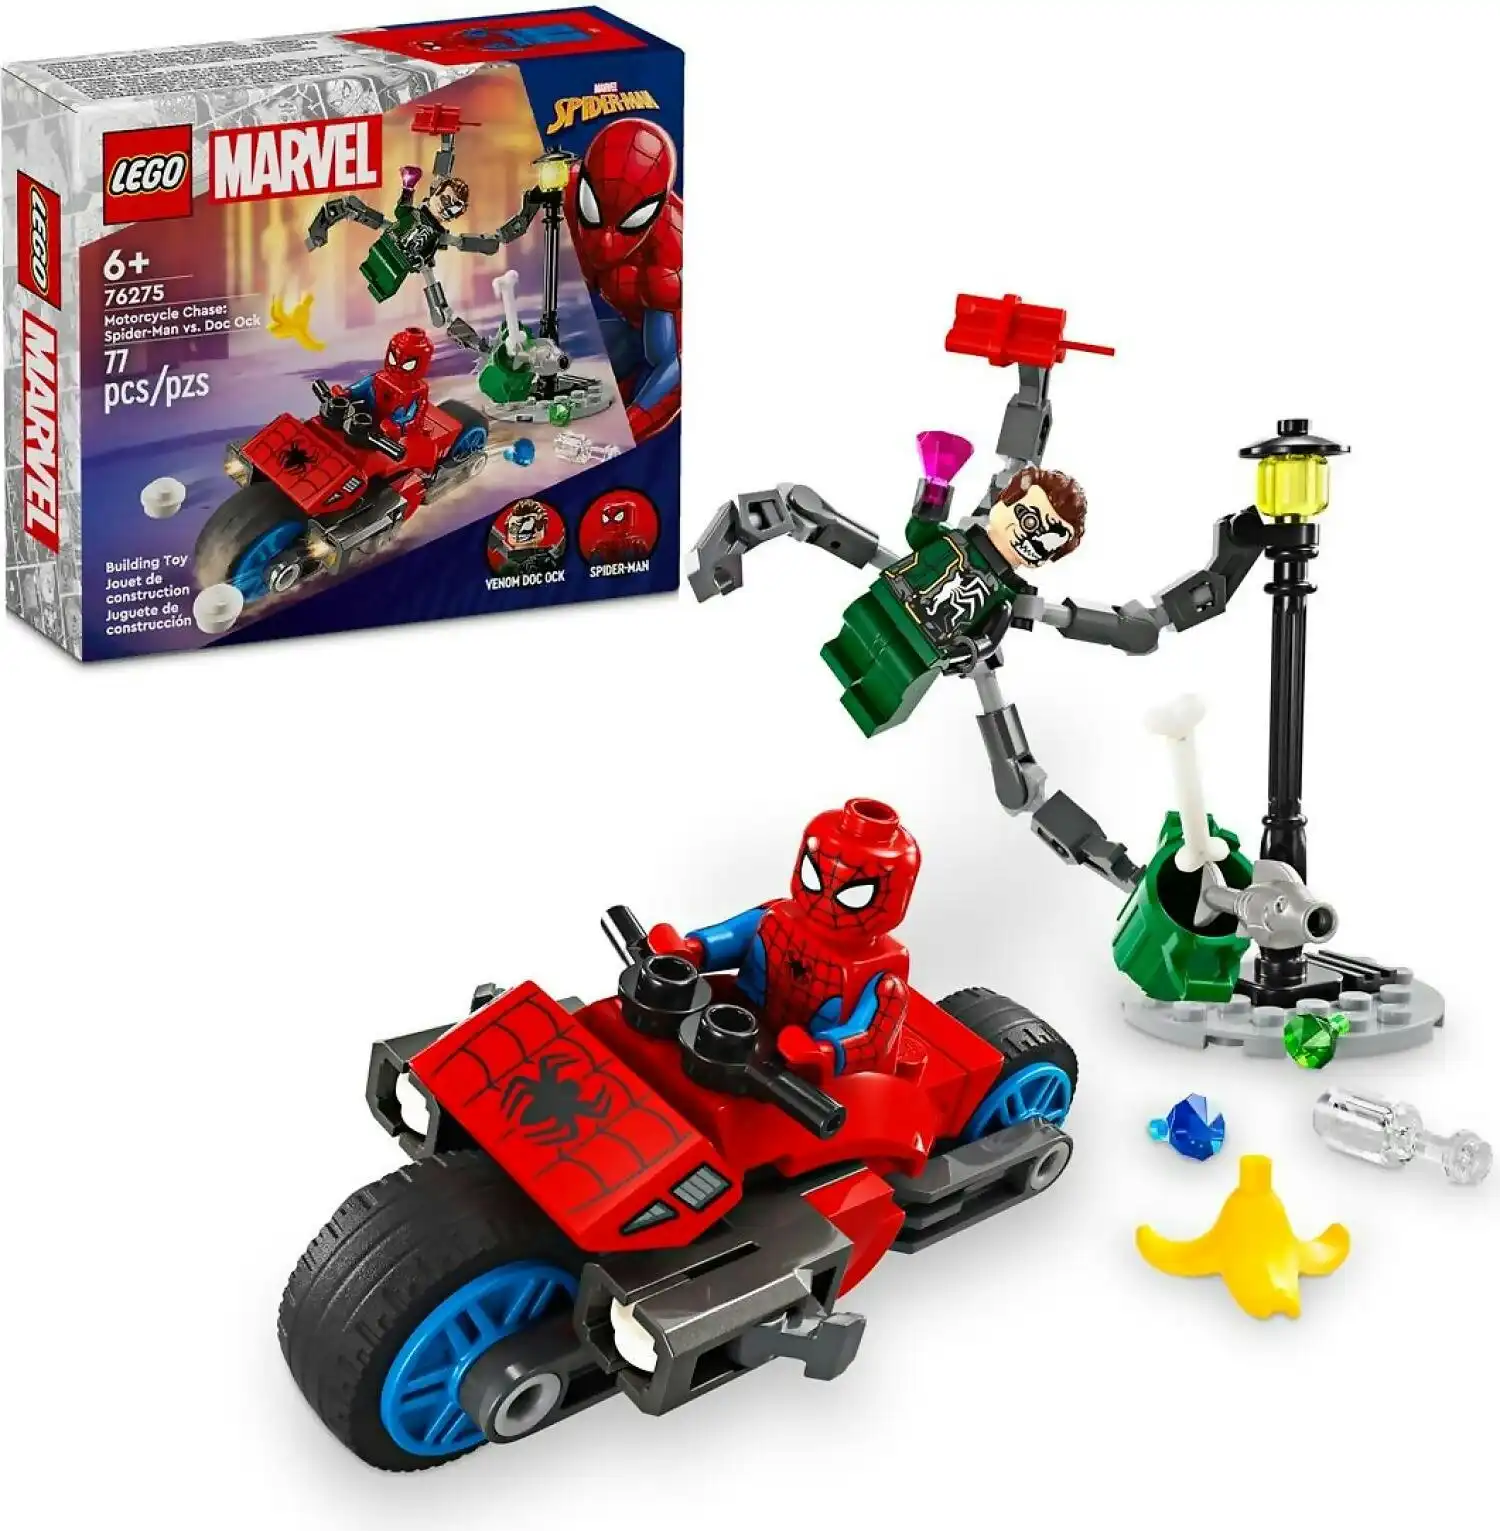 LEGO 76275 Motorcycle Chase: Spider-Man vs. Doc Ock - Super Heroes Marvel